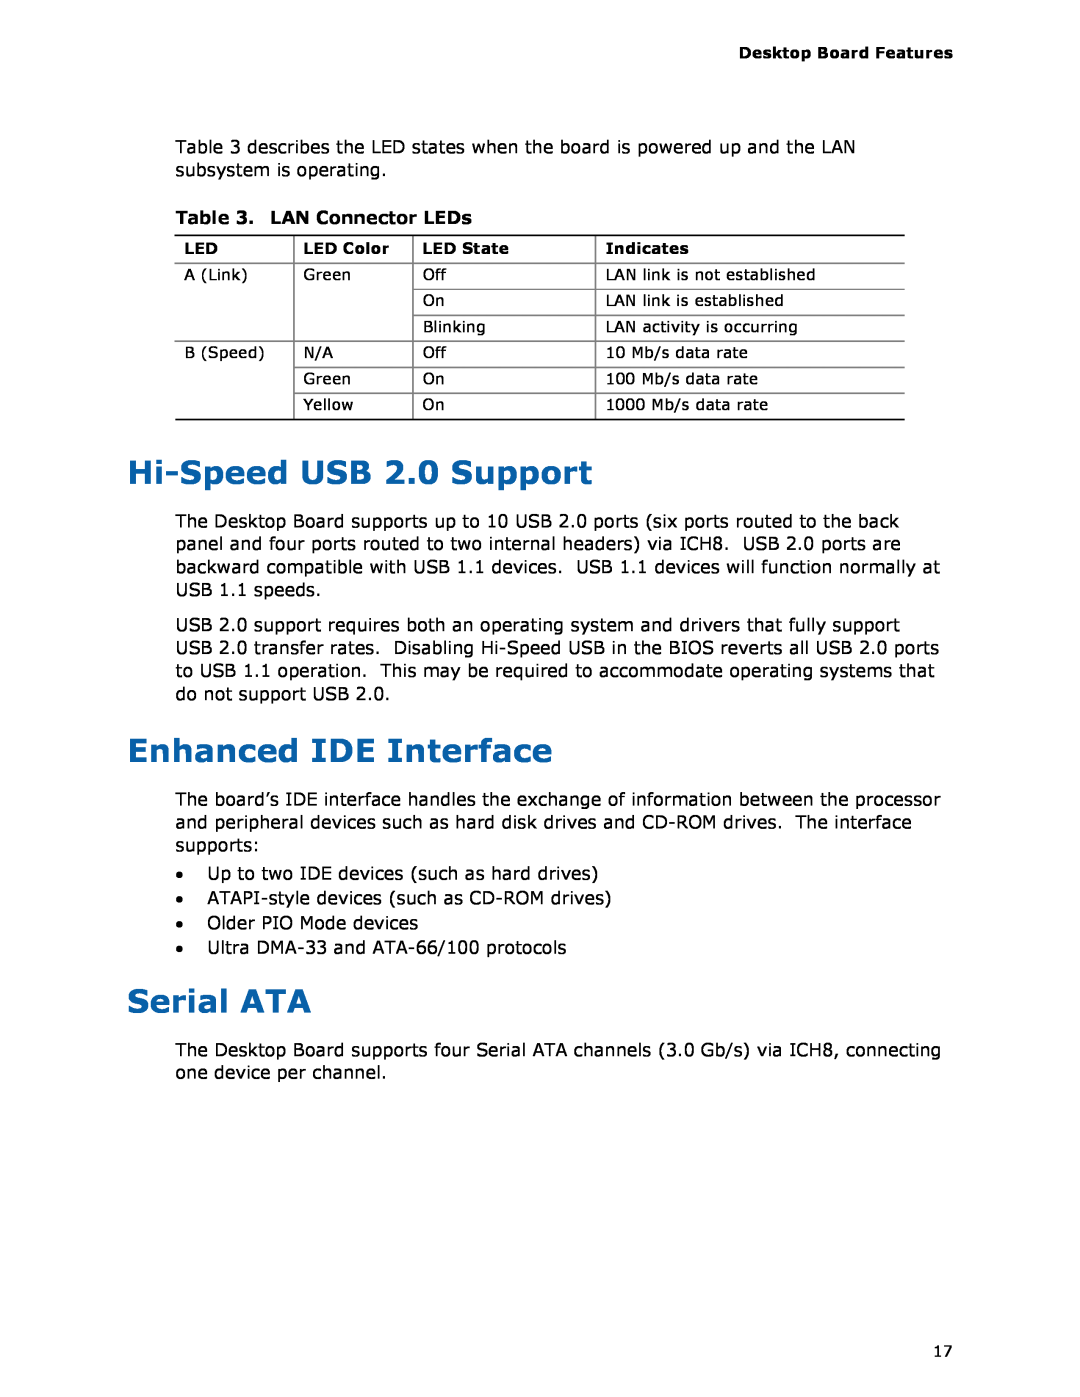 Intel DG35EC, Intel Desktop Board manual Hi-Speed USB 2.0 Support, Enhanced IDE Interface, Serial ATA, LAN Connector LEDs 